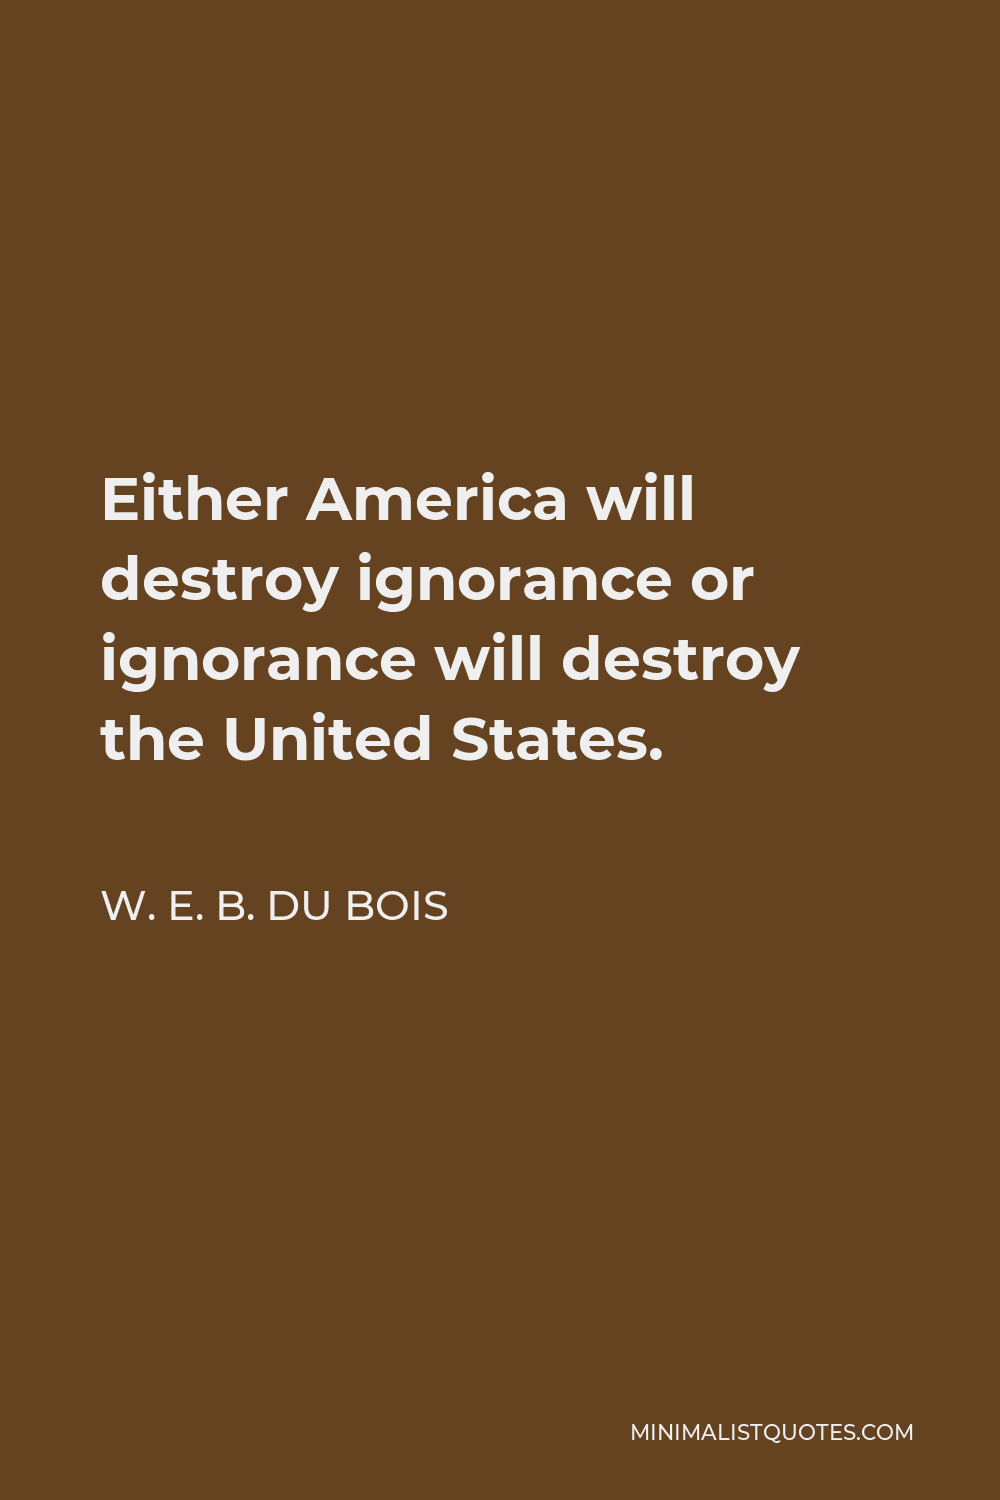 W. E. B. Du Bois Quote - Either America will destroy ignorance or ignorance will destroy the United States.